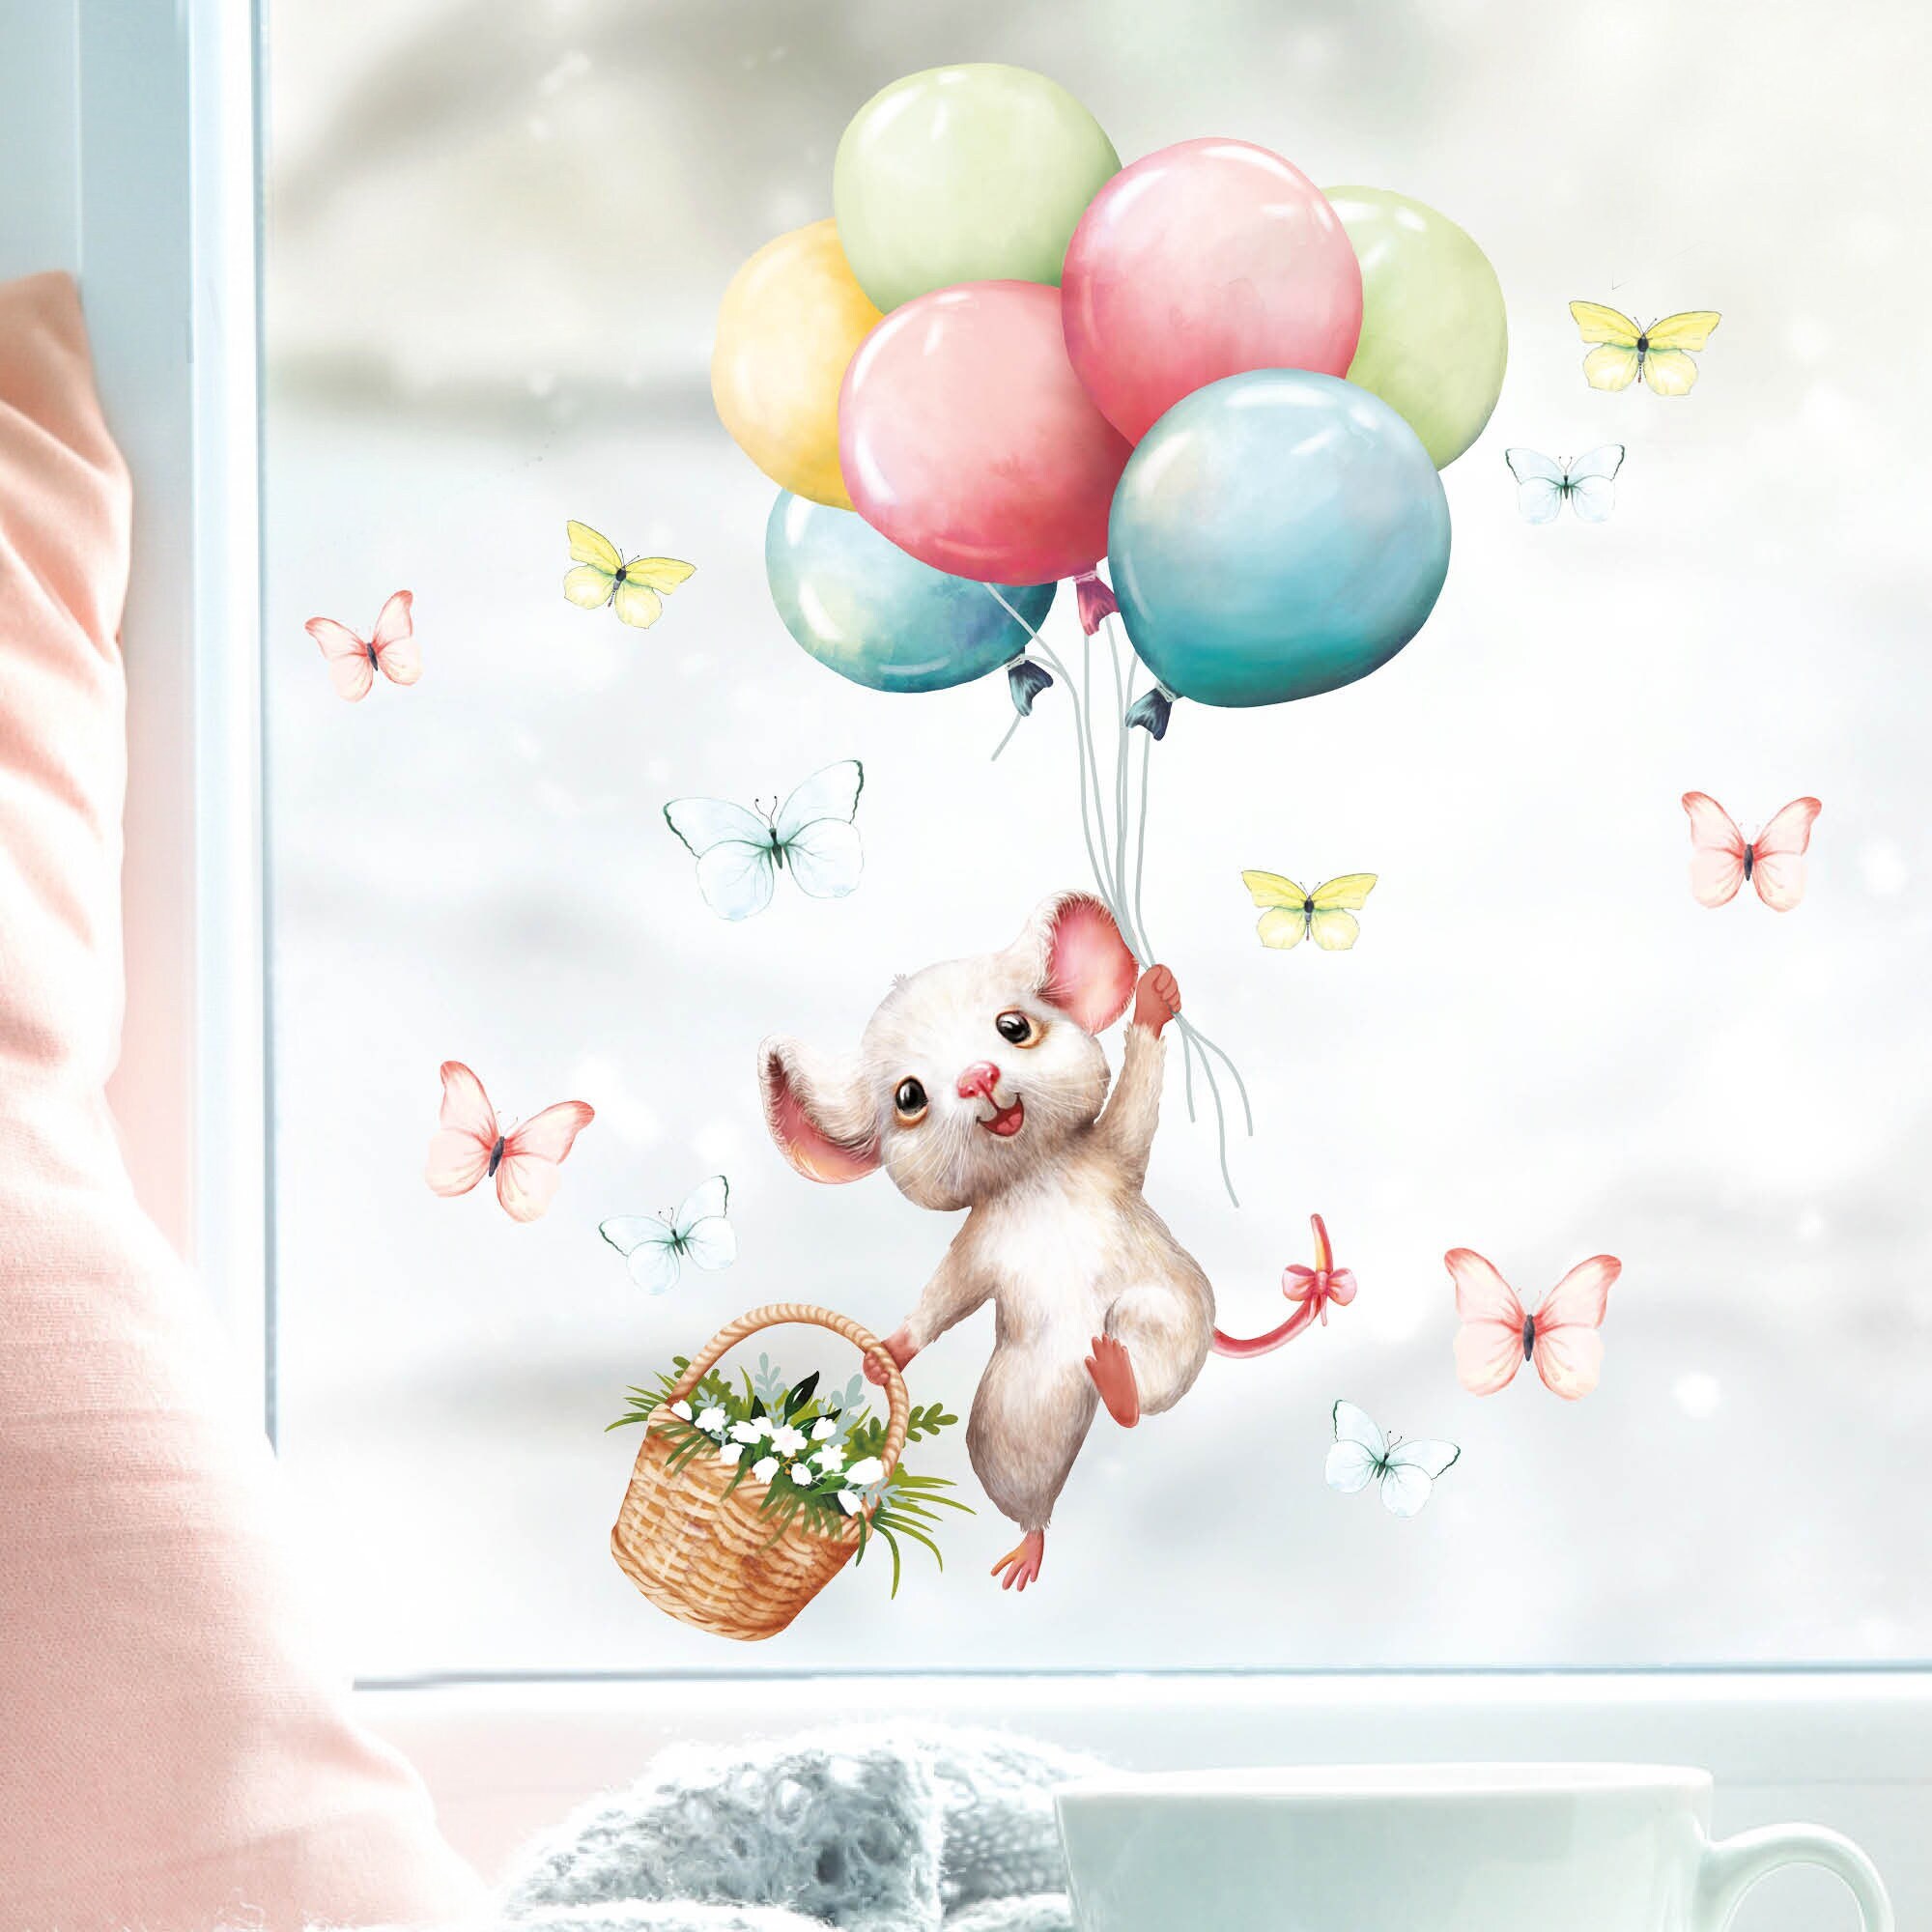 Fensterbild Frühling Ostern Maus Luftballons Schmetterlinge Fensterdeko Kinderzimmer Kind, Osterdeko Frühlingsdeko